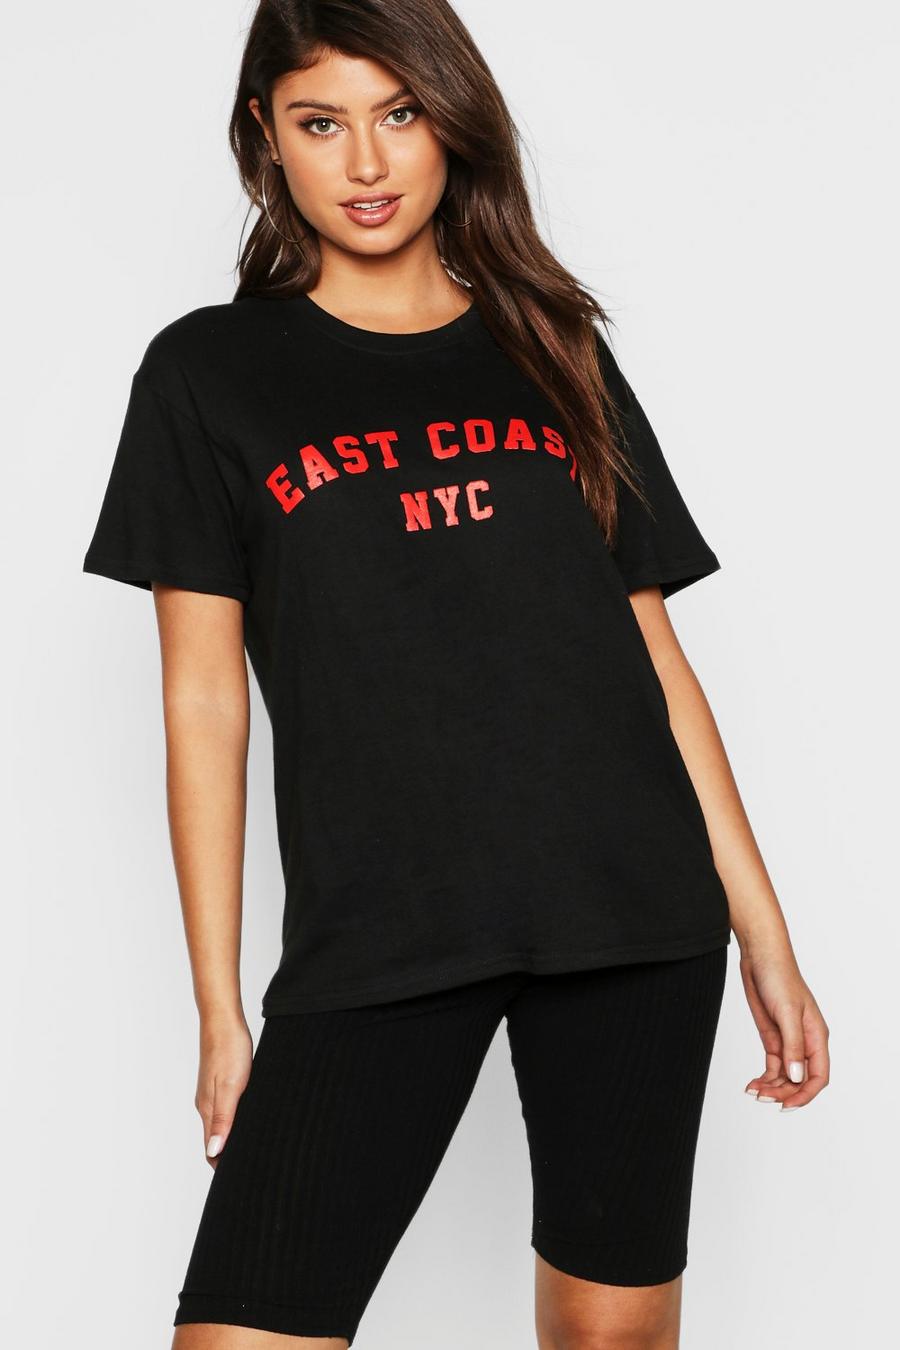 Camiseta con eslogan “East Coast” image number 1